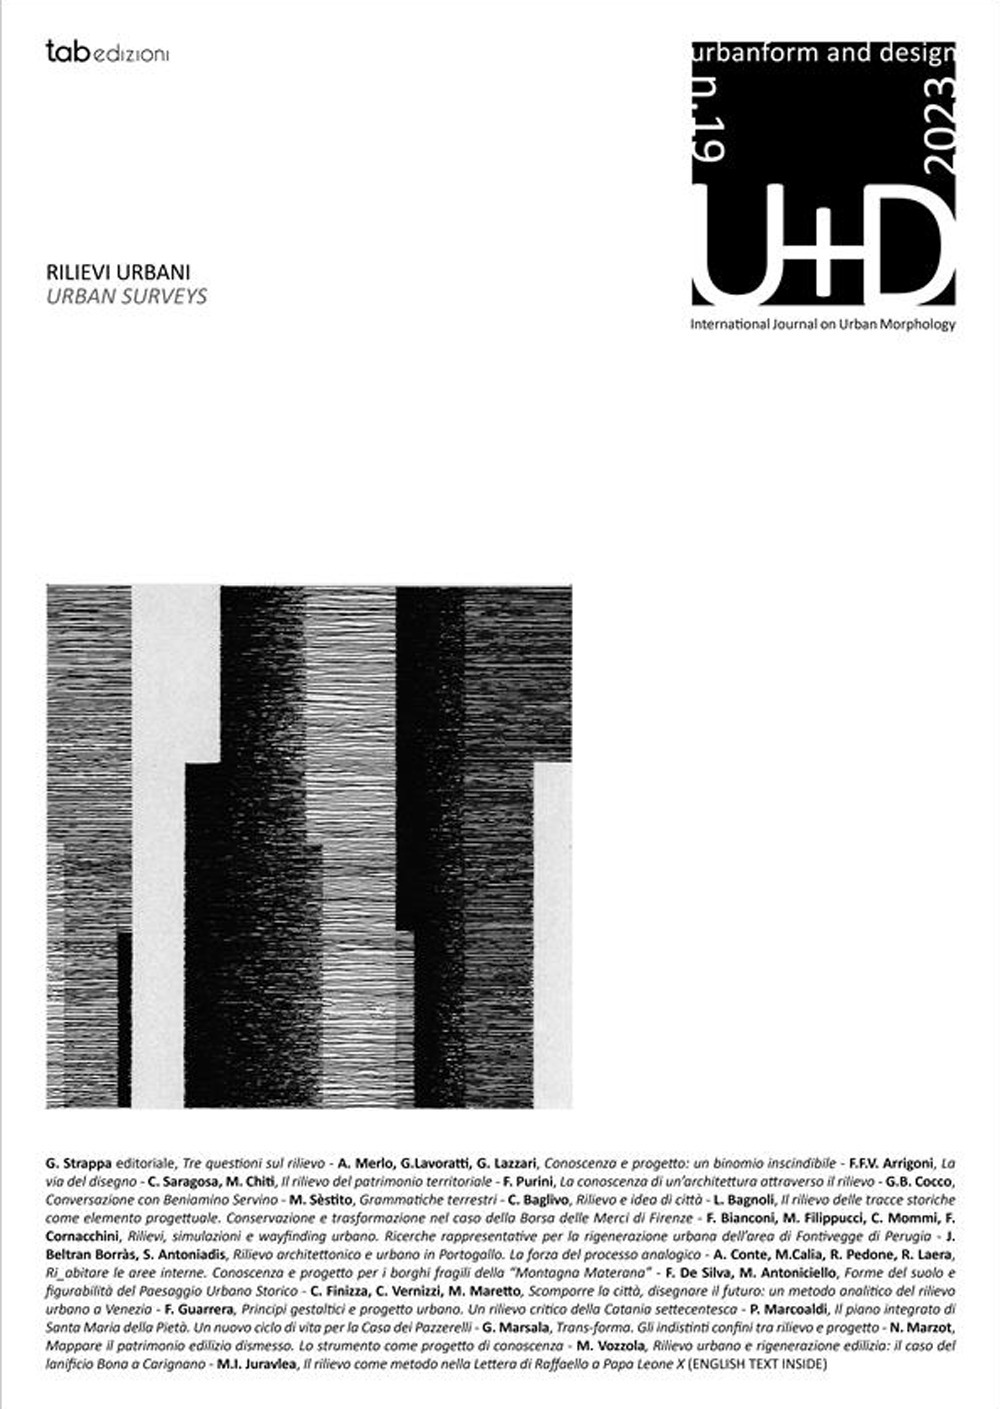 U+D. Urbanform and design. Nuova ediz.. Vol. 19: Rilievi urbani-Urban Surveys